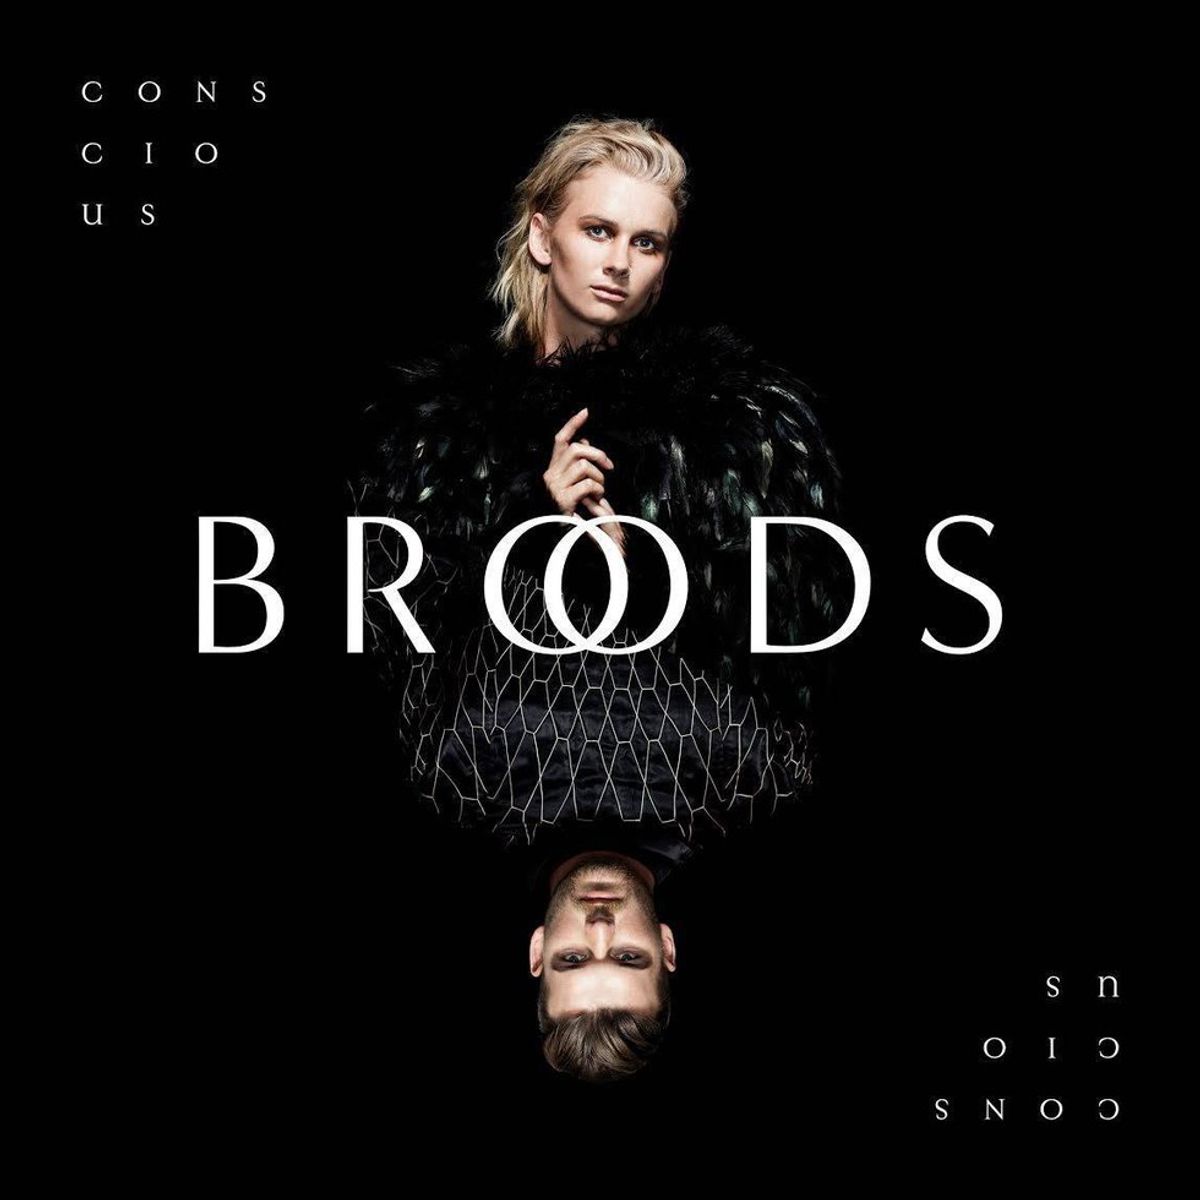 Broods Album Review: Conscious